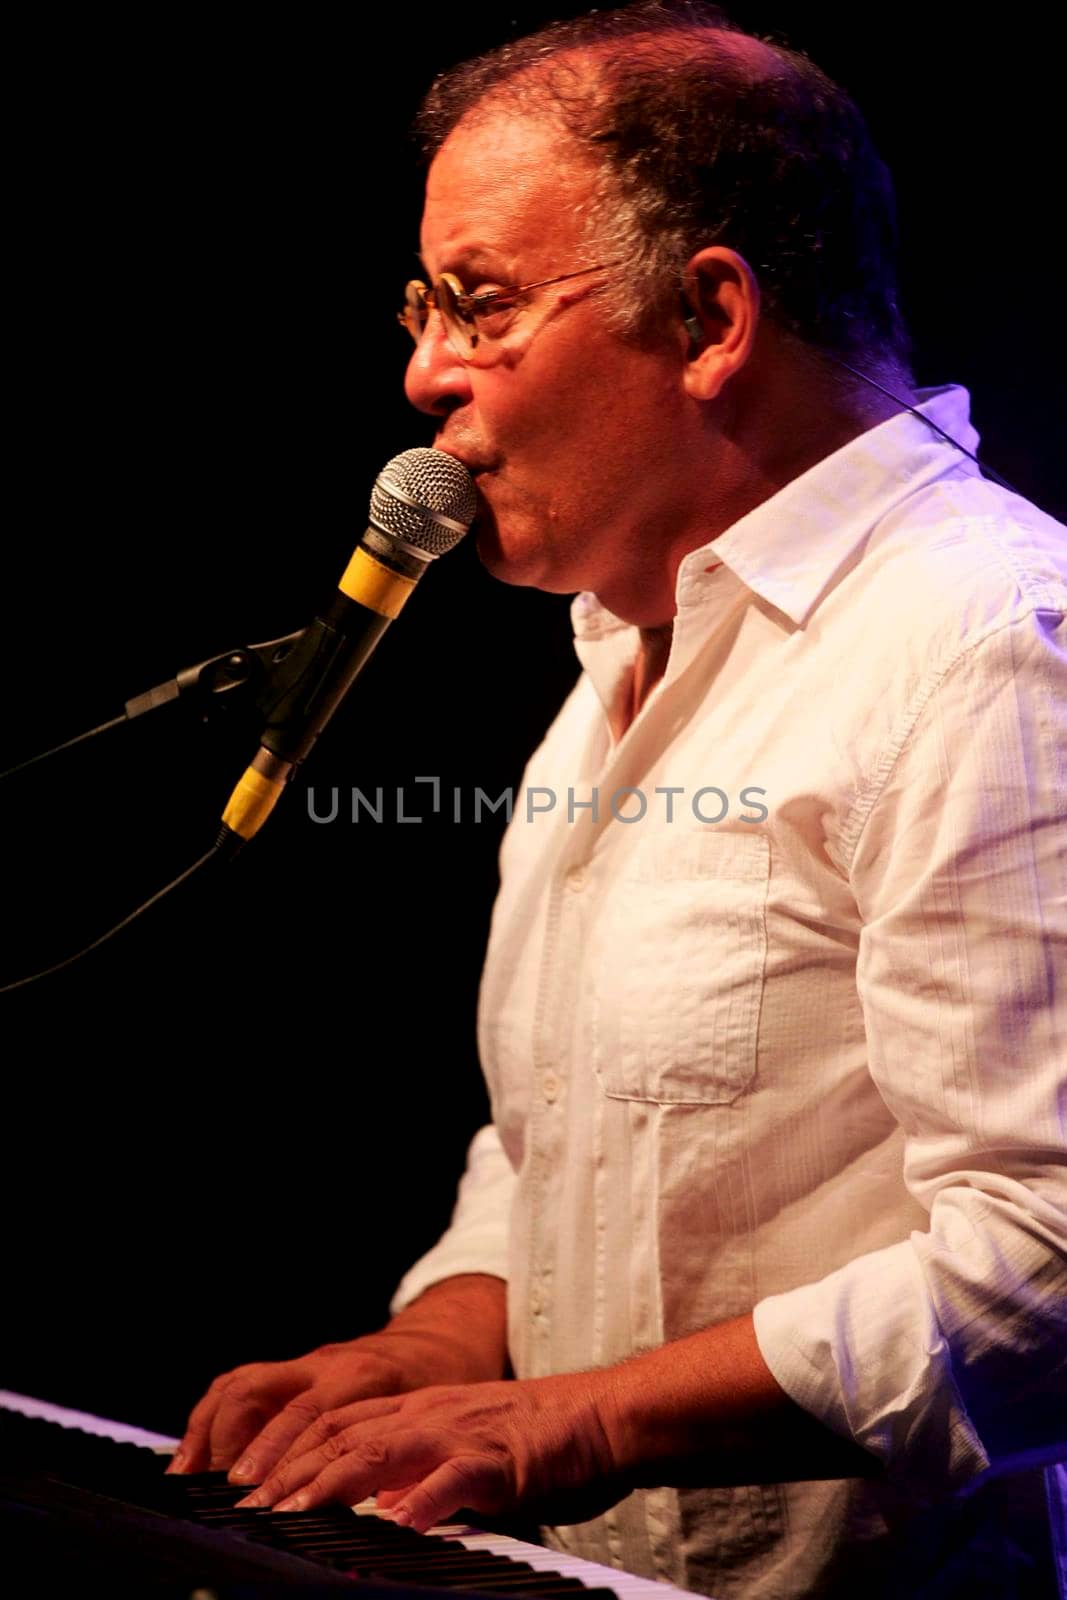 porto seguro, bahia / brazil - november 13, 2009: Discovery Music Festival features the performance of singer Guilherme Arantes in Porto Seguro.


